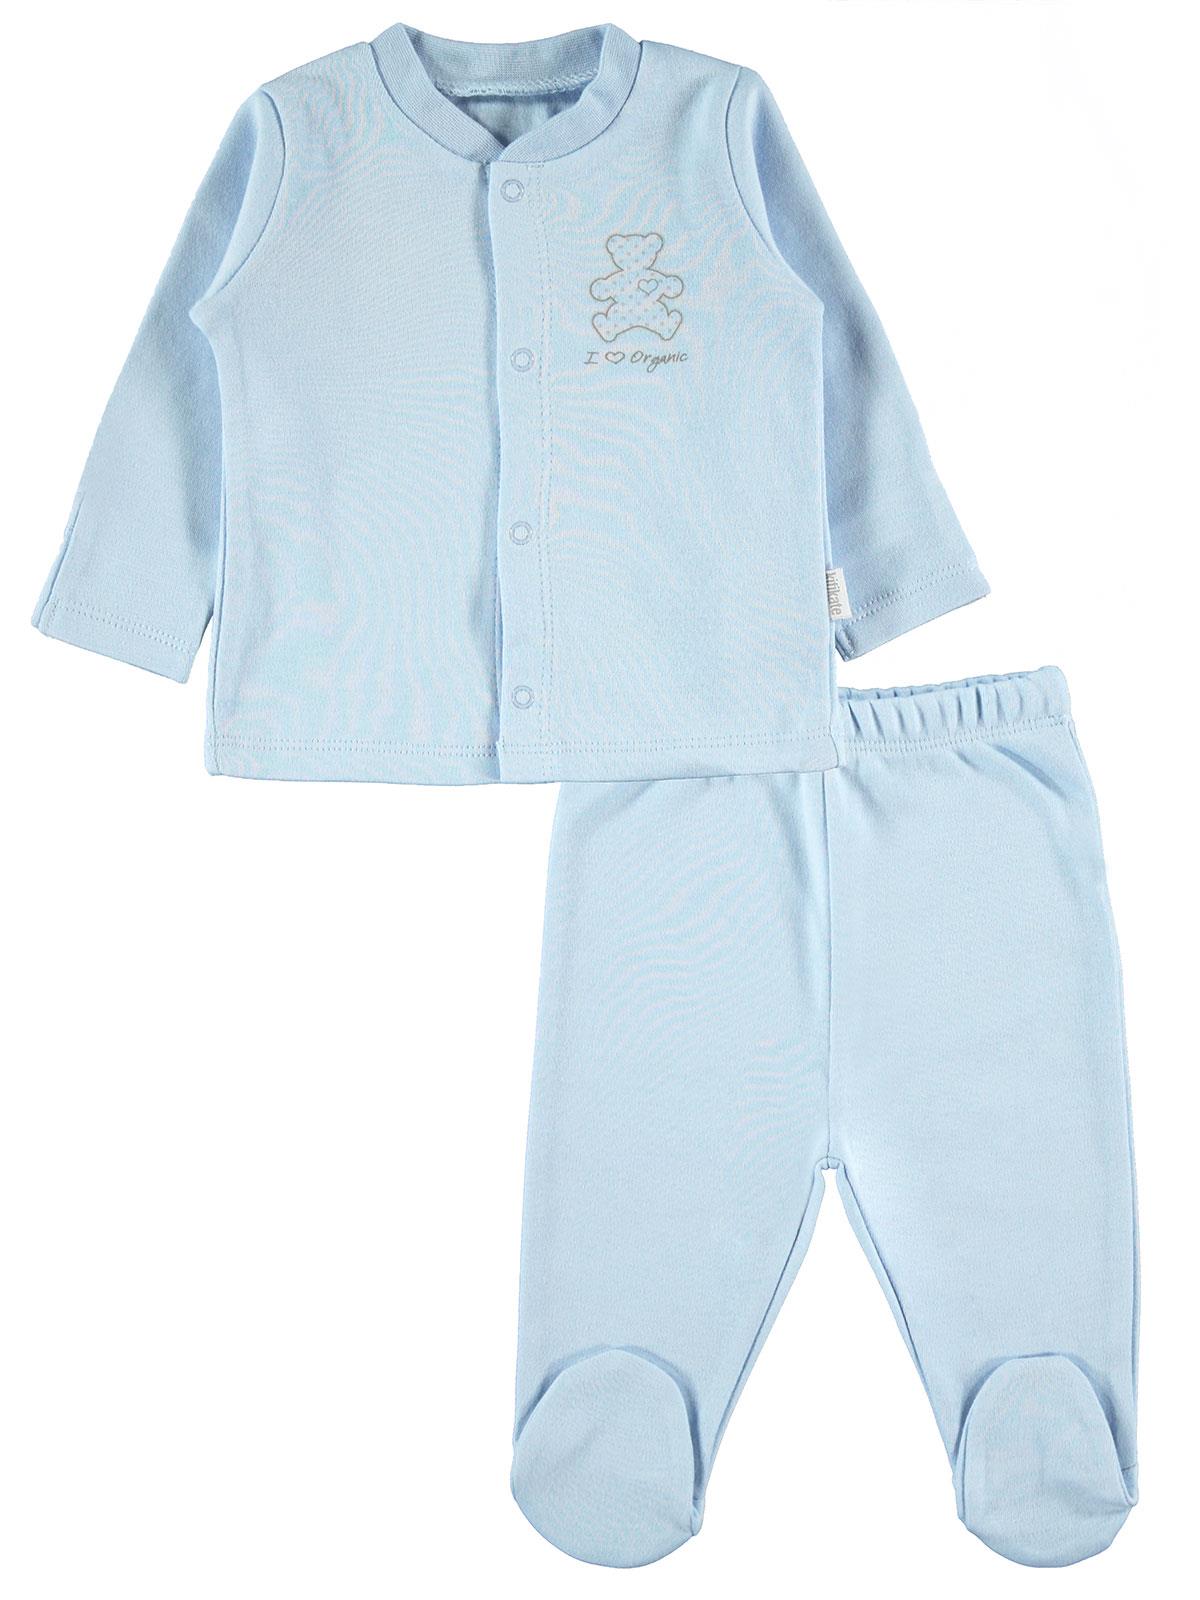 Baby Center Organik Penye Pijama Takımı 0-6 Ay Mavi